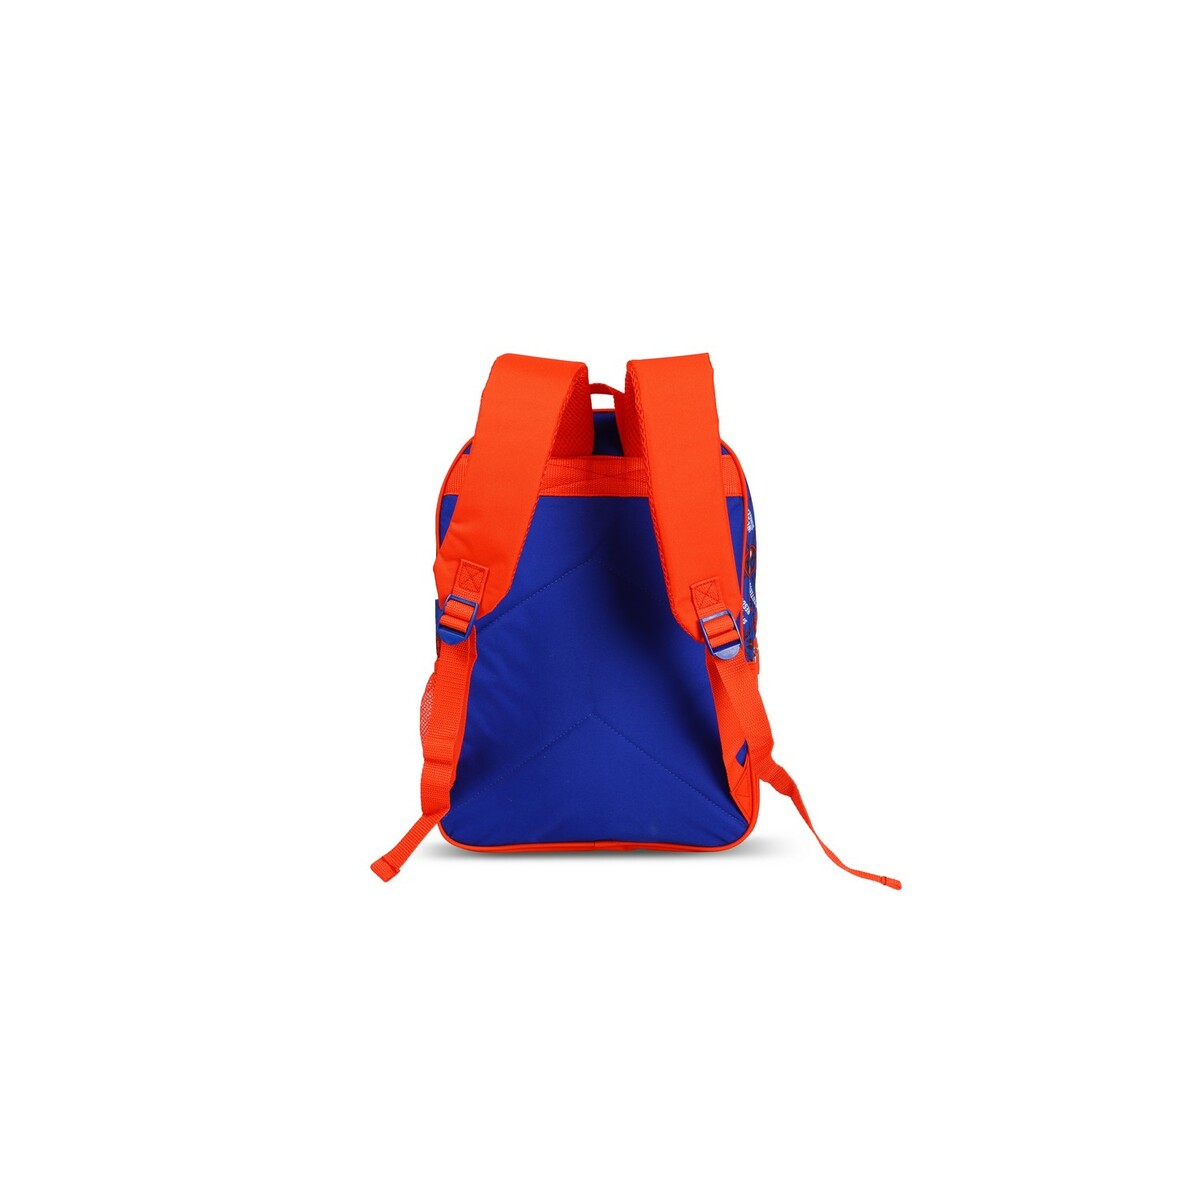 Spiderman Sense Backpack 16inch-WDP1551